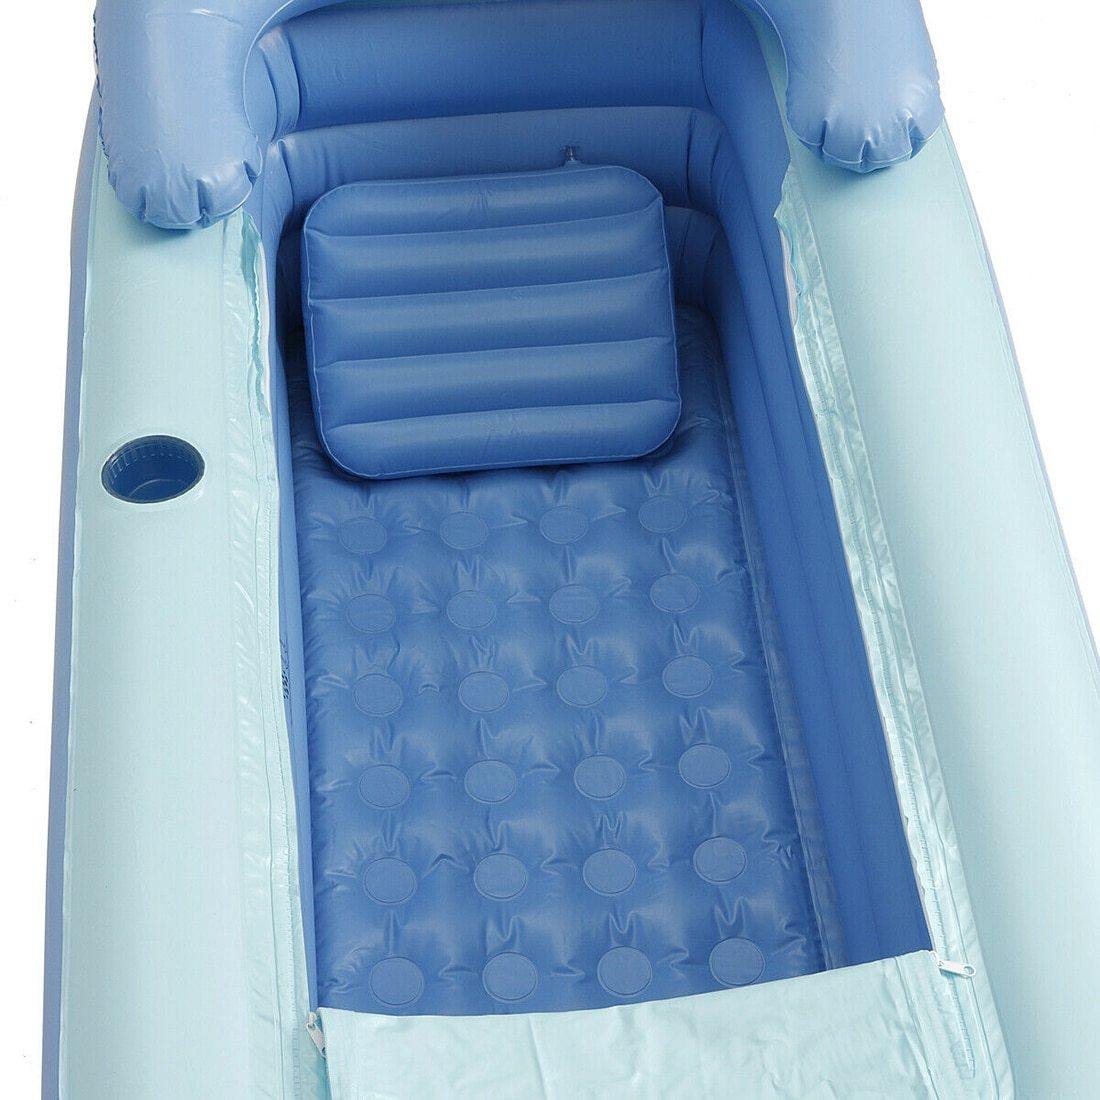 Foldable Adult Inflatable Bathtub - UTILITY5STORE